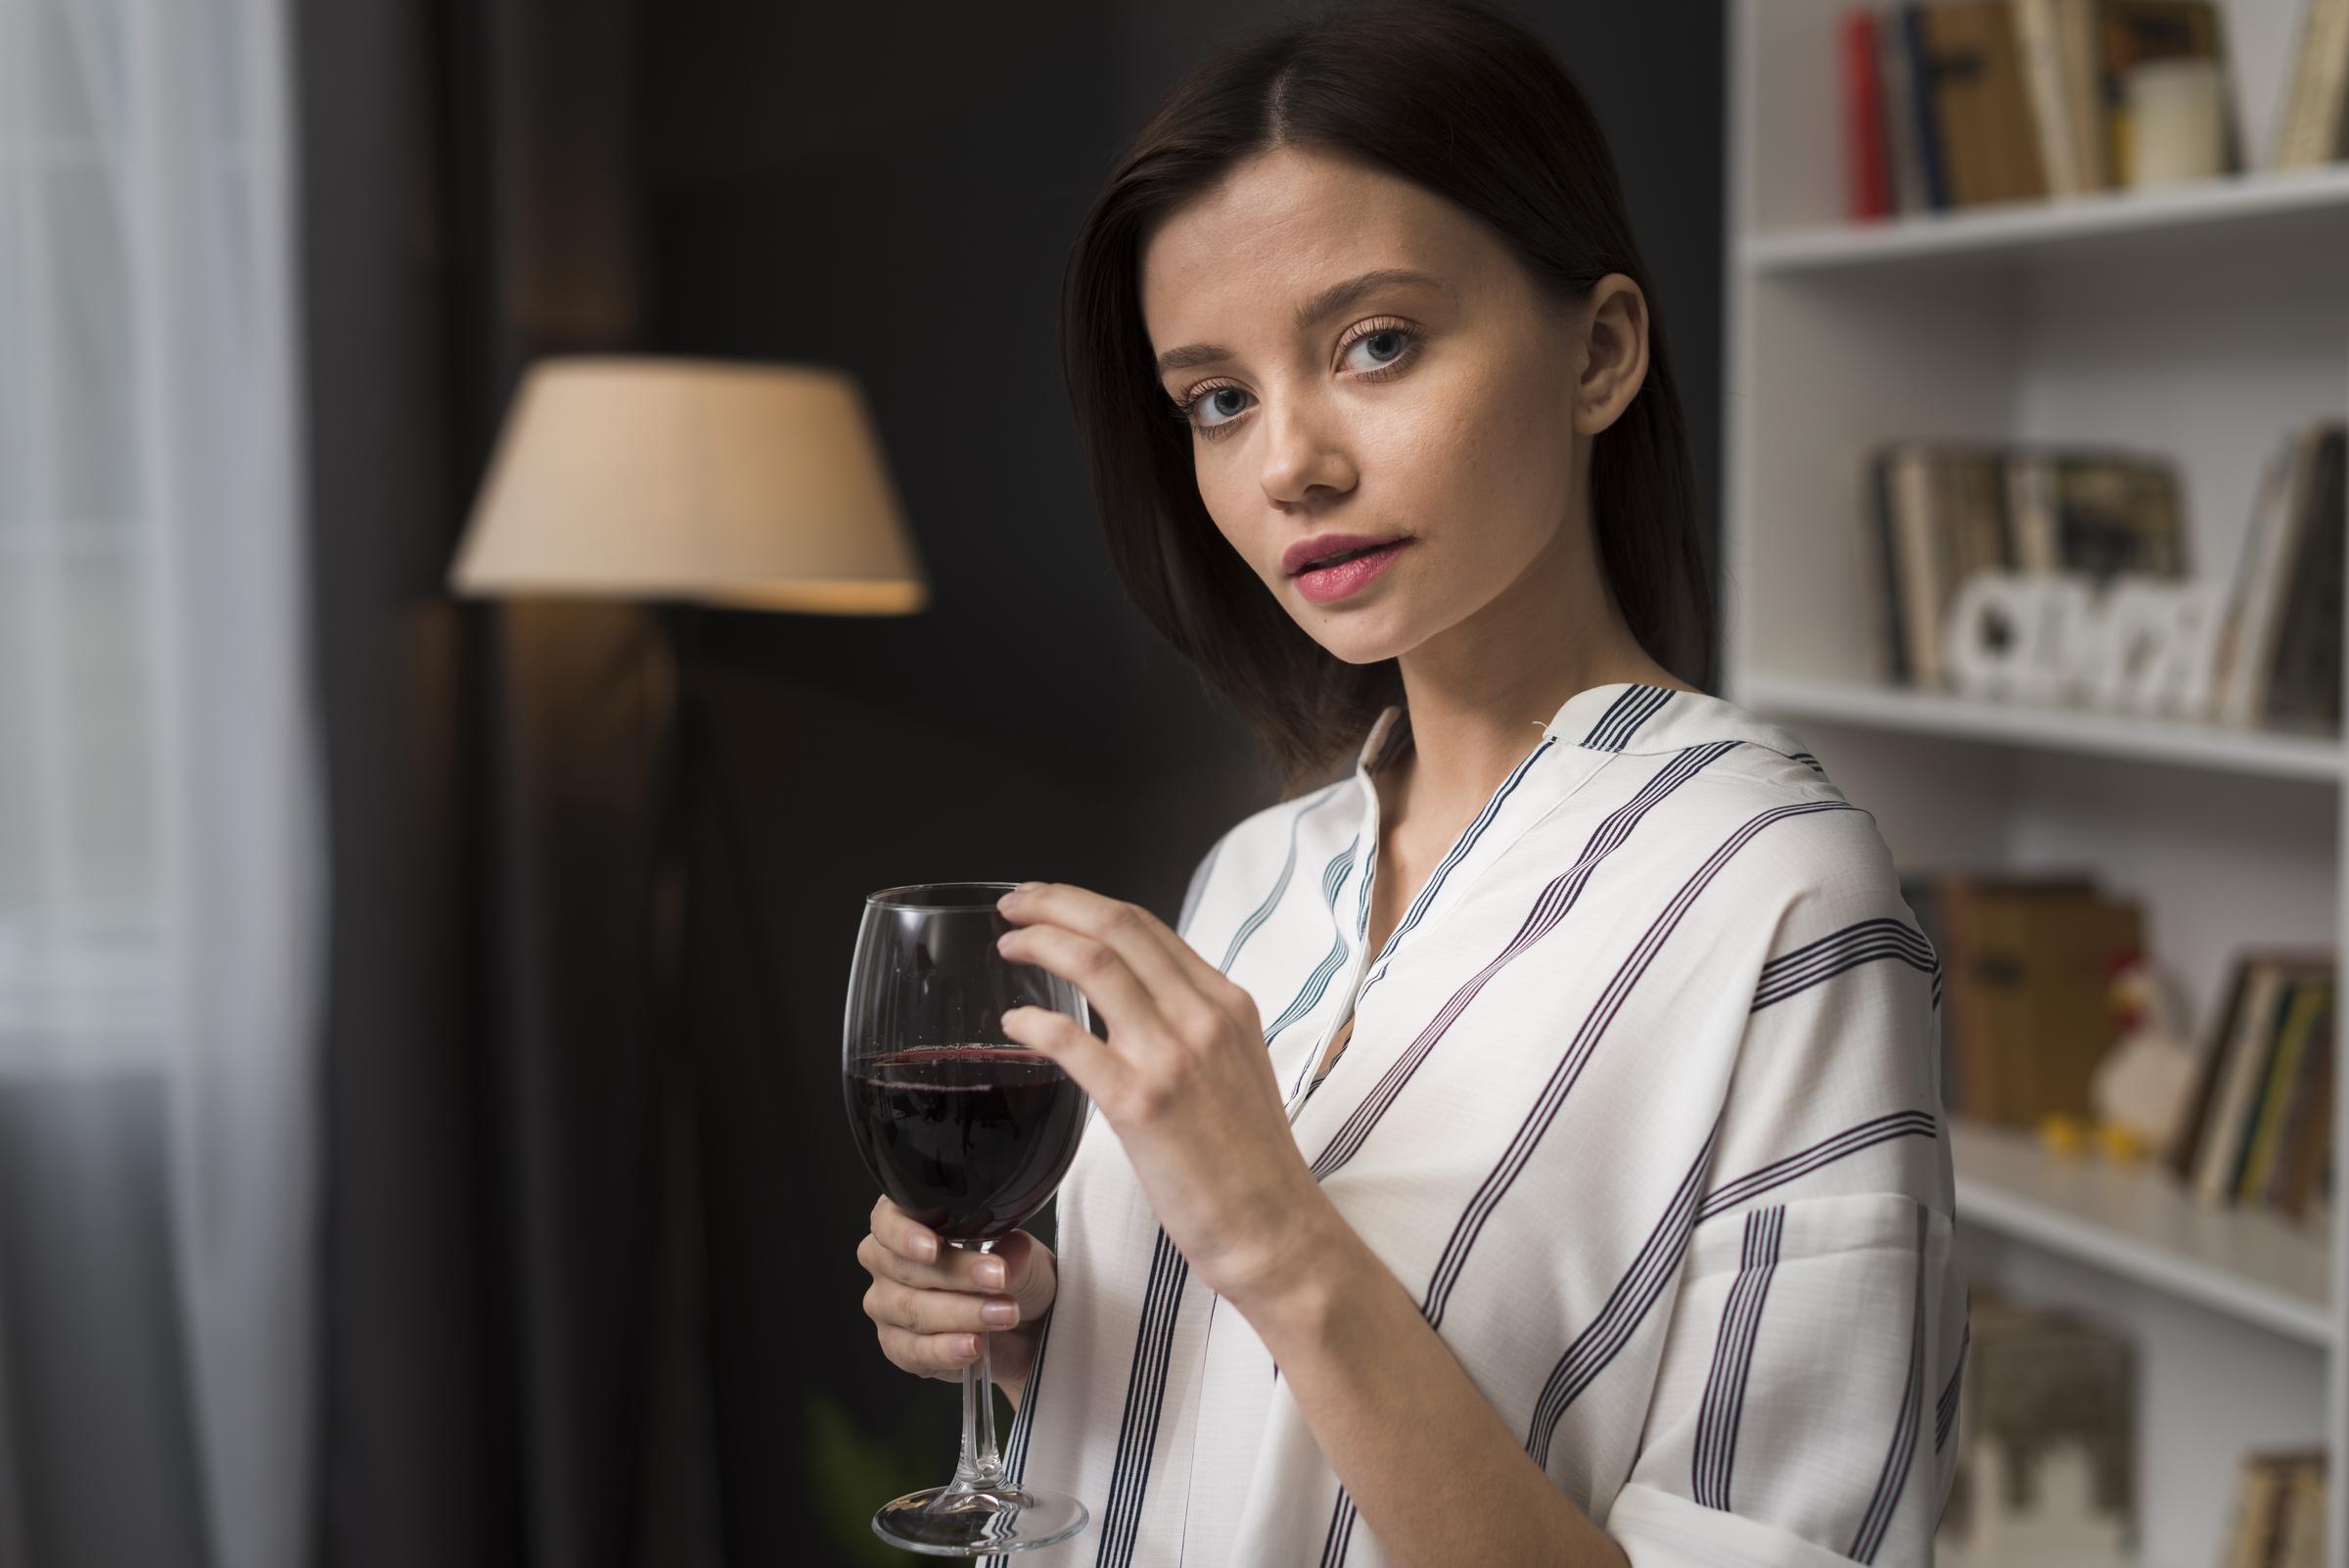 A woman holding a glass of wine | Source: Freepik